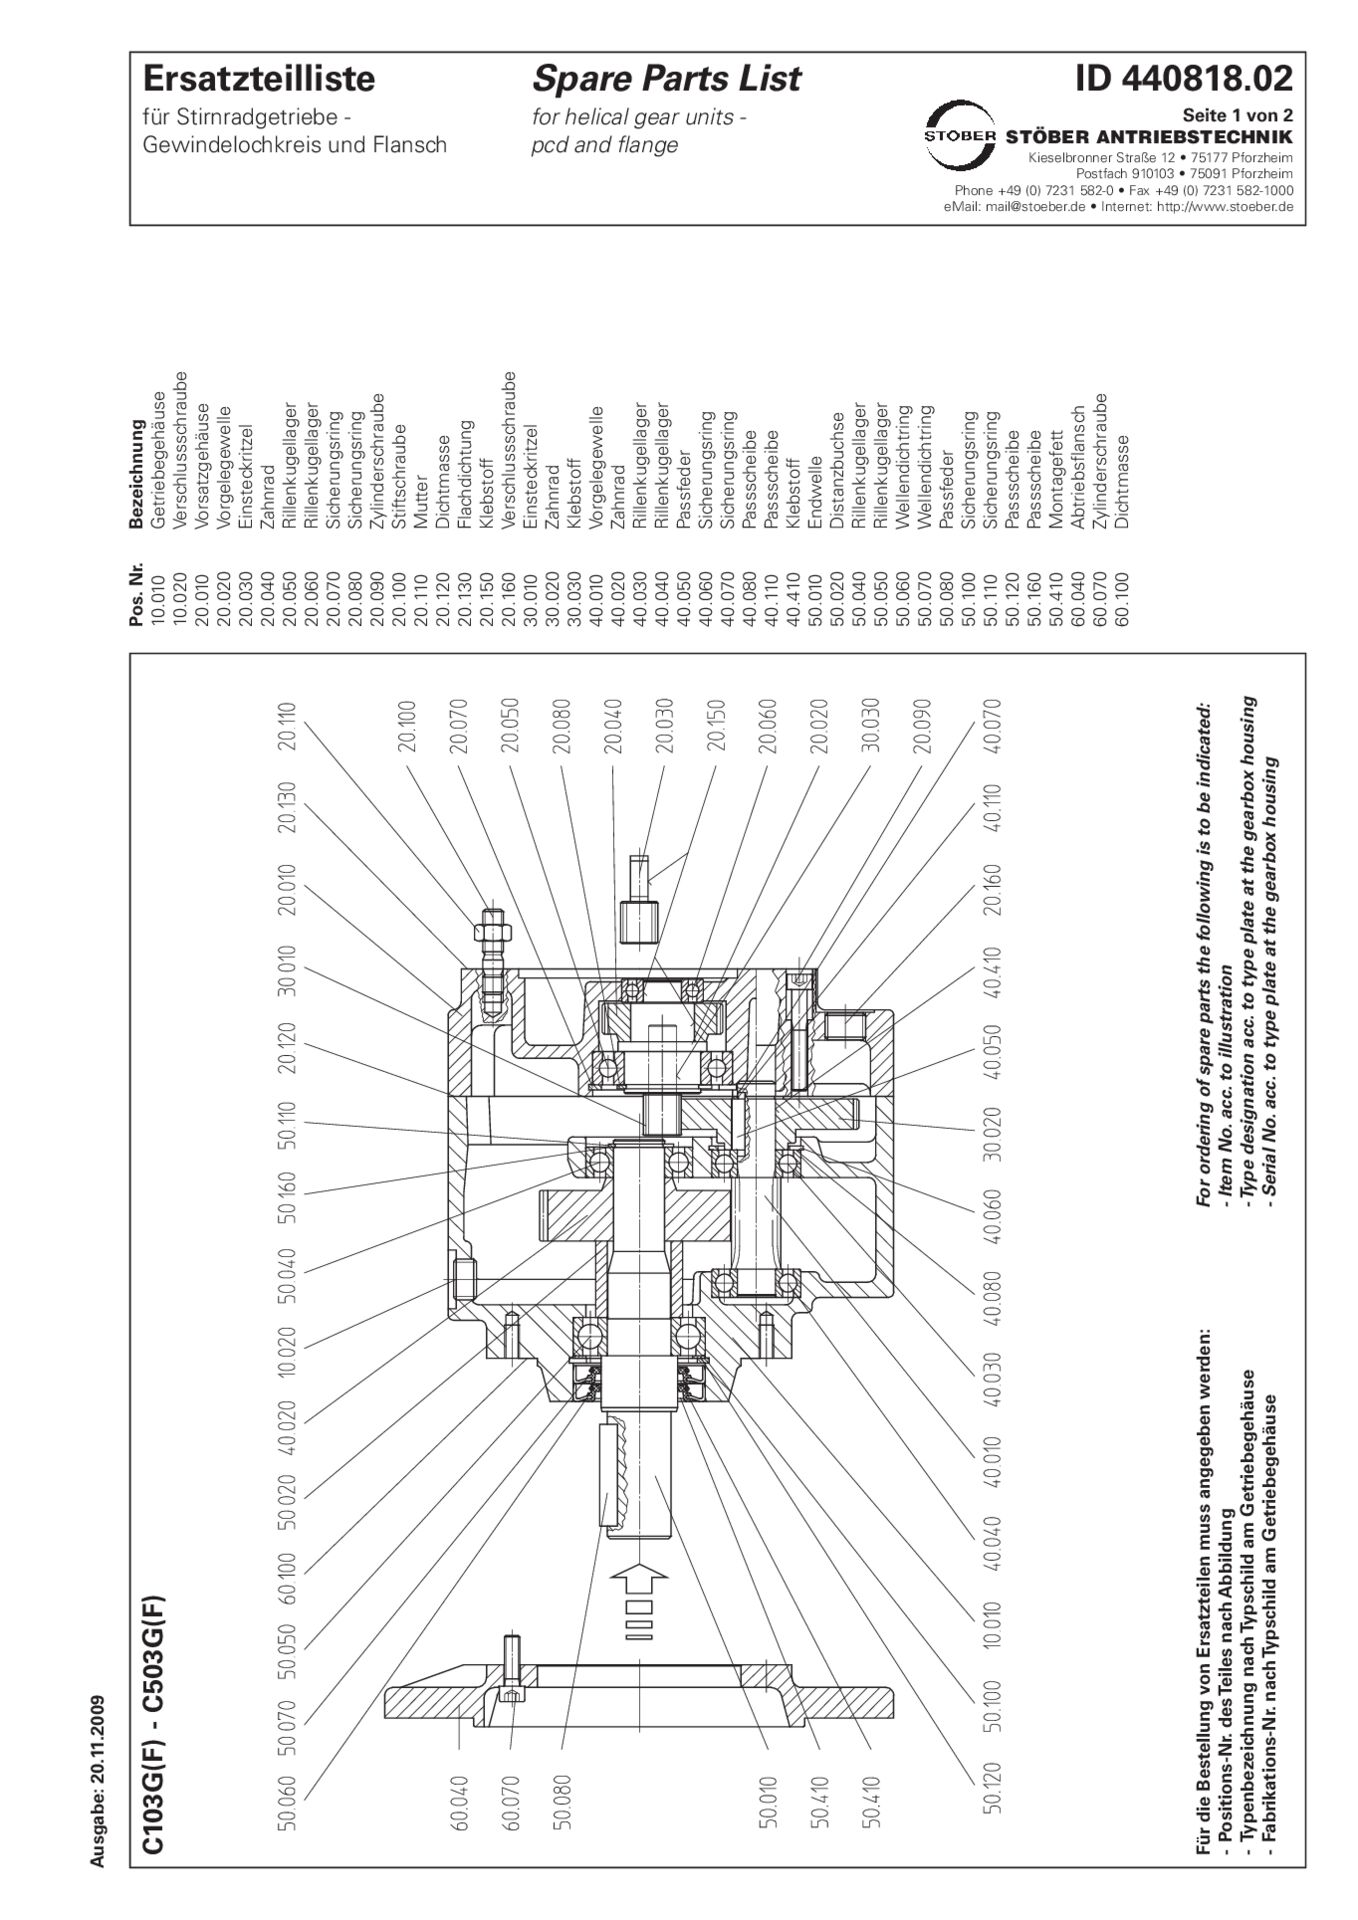 Replacement parts list helical gear units C103 C203 C303 C403 C503 G F